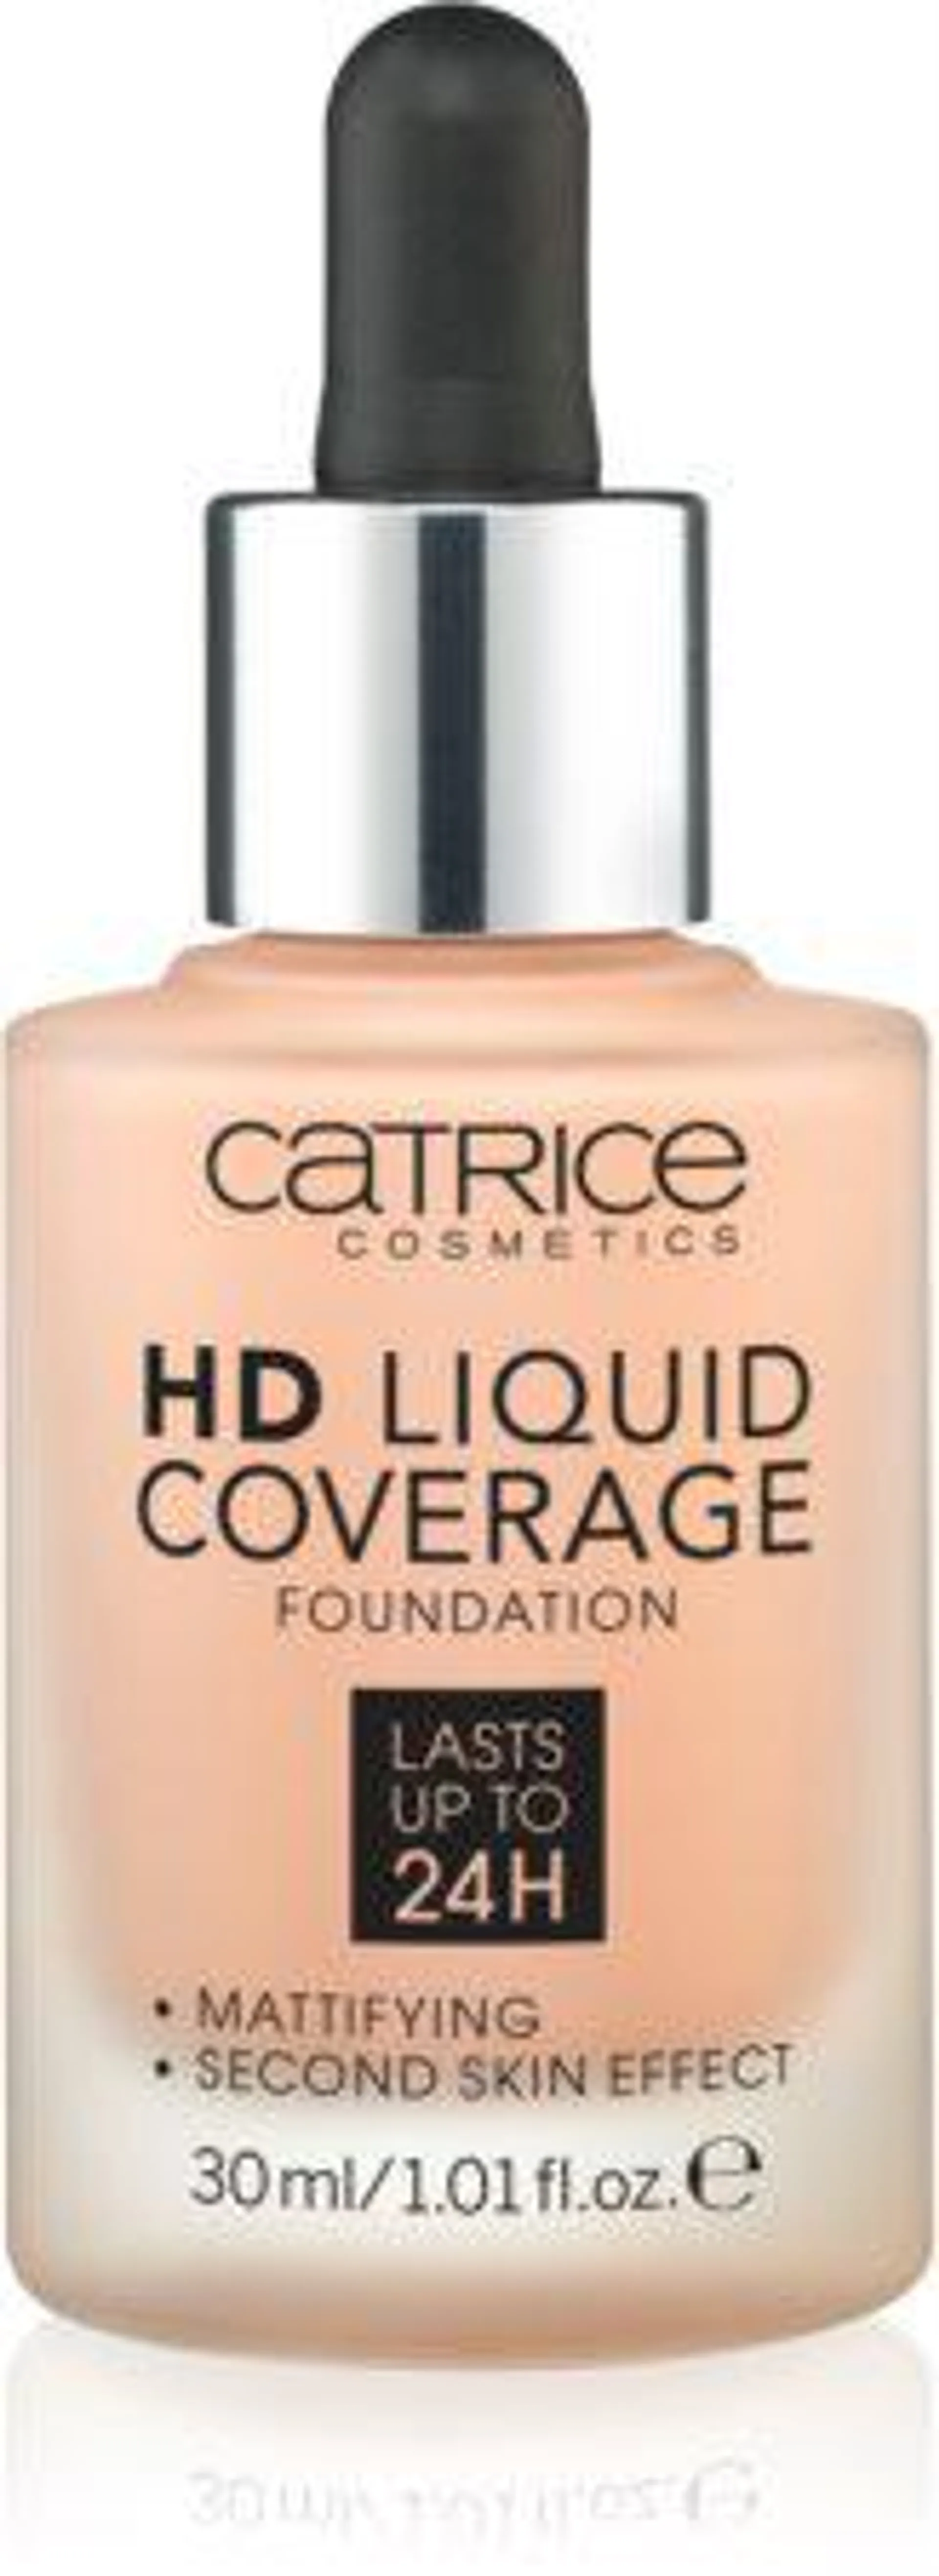 HD Liquid Coverage